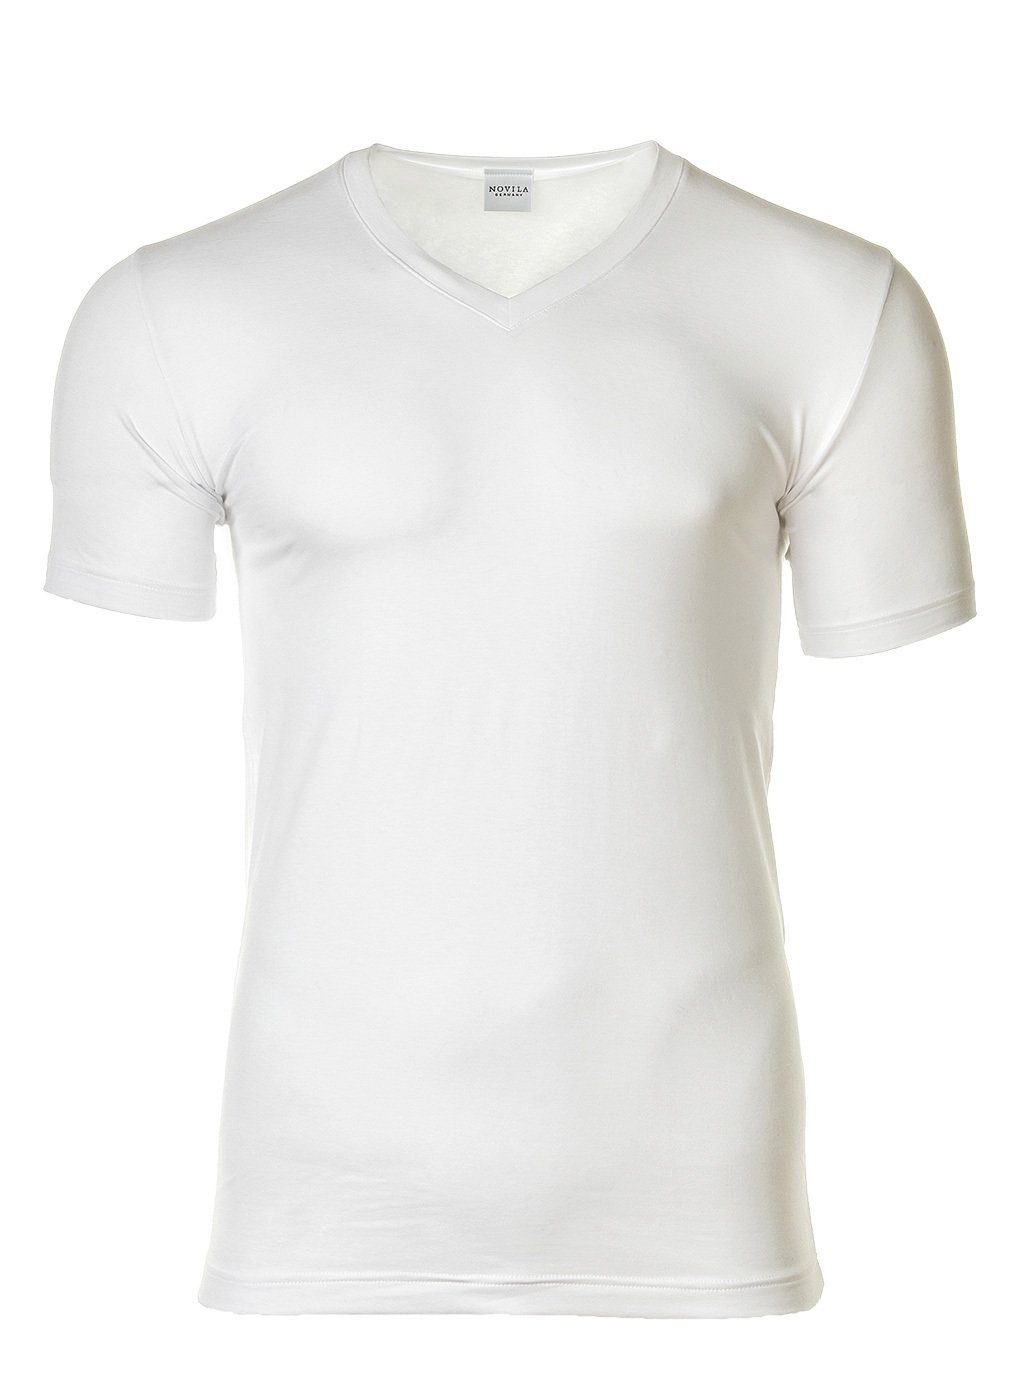 Cotton Novila - T-Shirt Herren T-Shirt Stretch V-Ausschnitt,